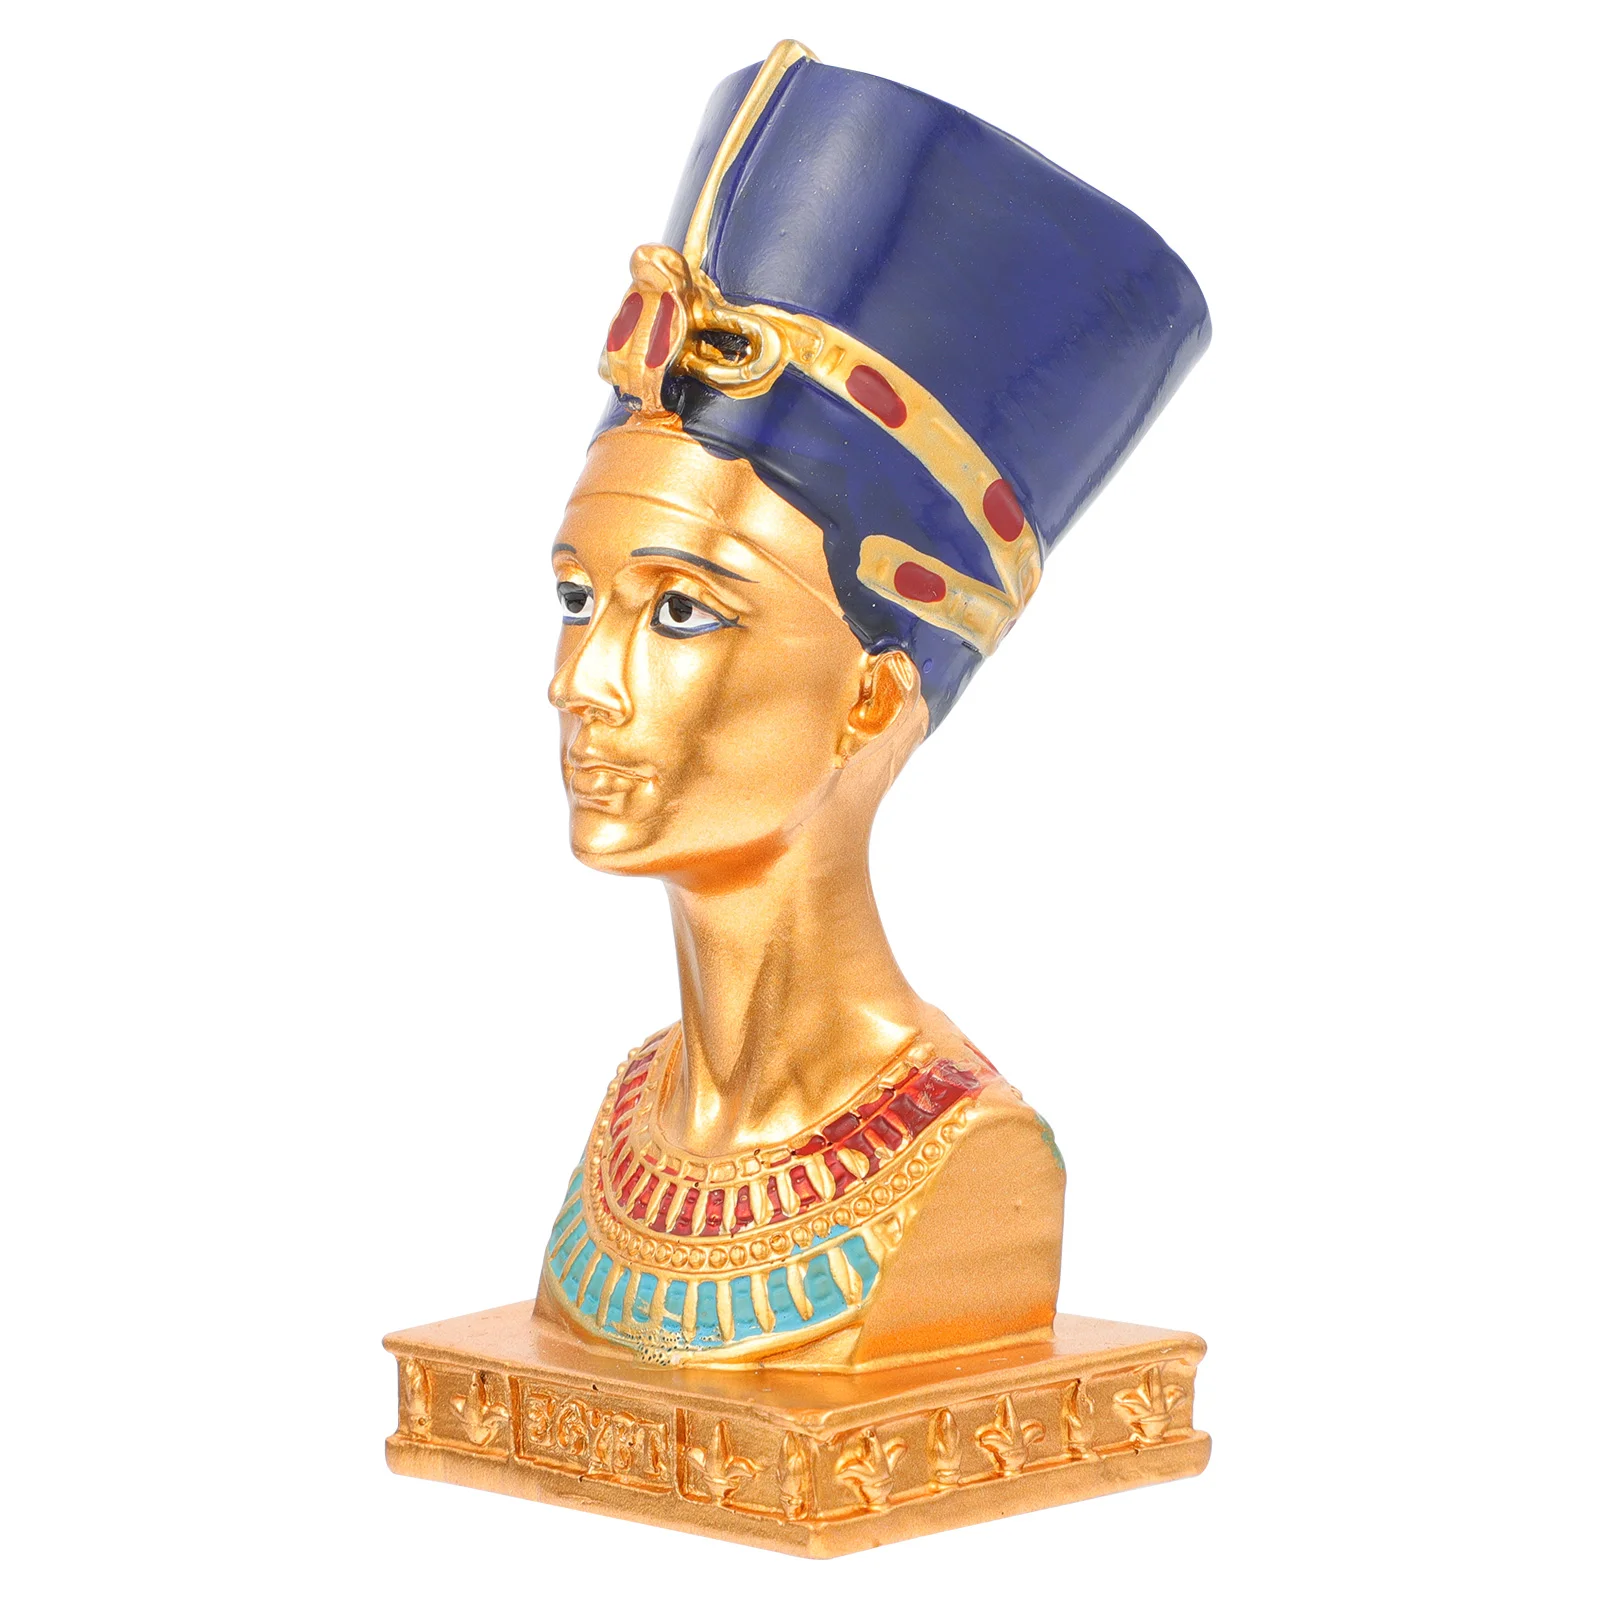 

Egyptian Statue Ancient Adornmentnefertiti Egypt Bust Figurine Ornament Pharaoh Sculpture Desktop Home Figurines Tabletop Head